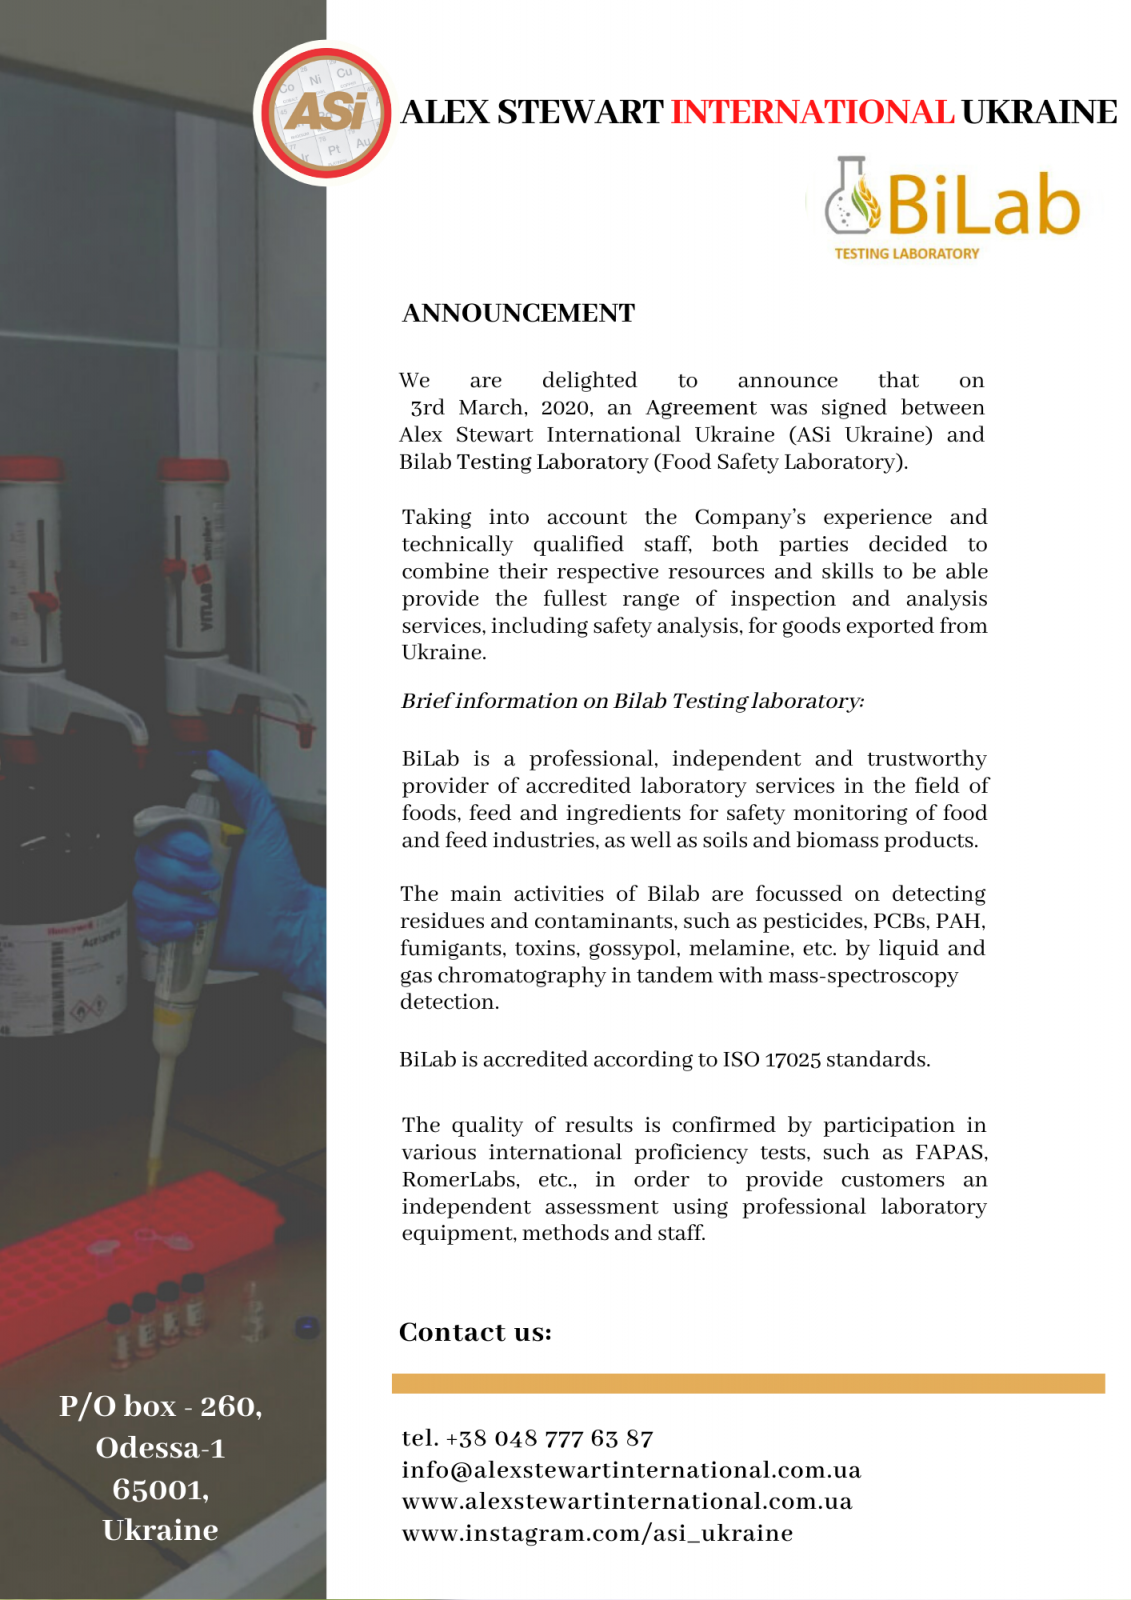 Agreement between Alex Stewart International Ukraine (ASi Ukraine) and Bilab Testing Laboratory (Food Safety Laboratory)